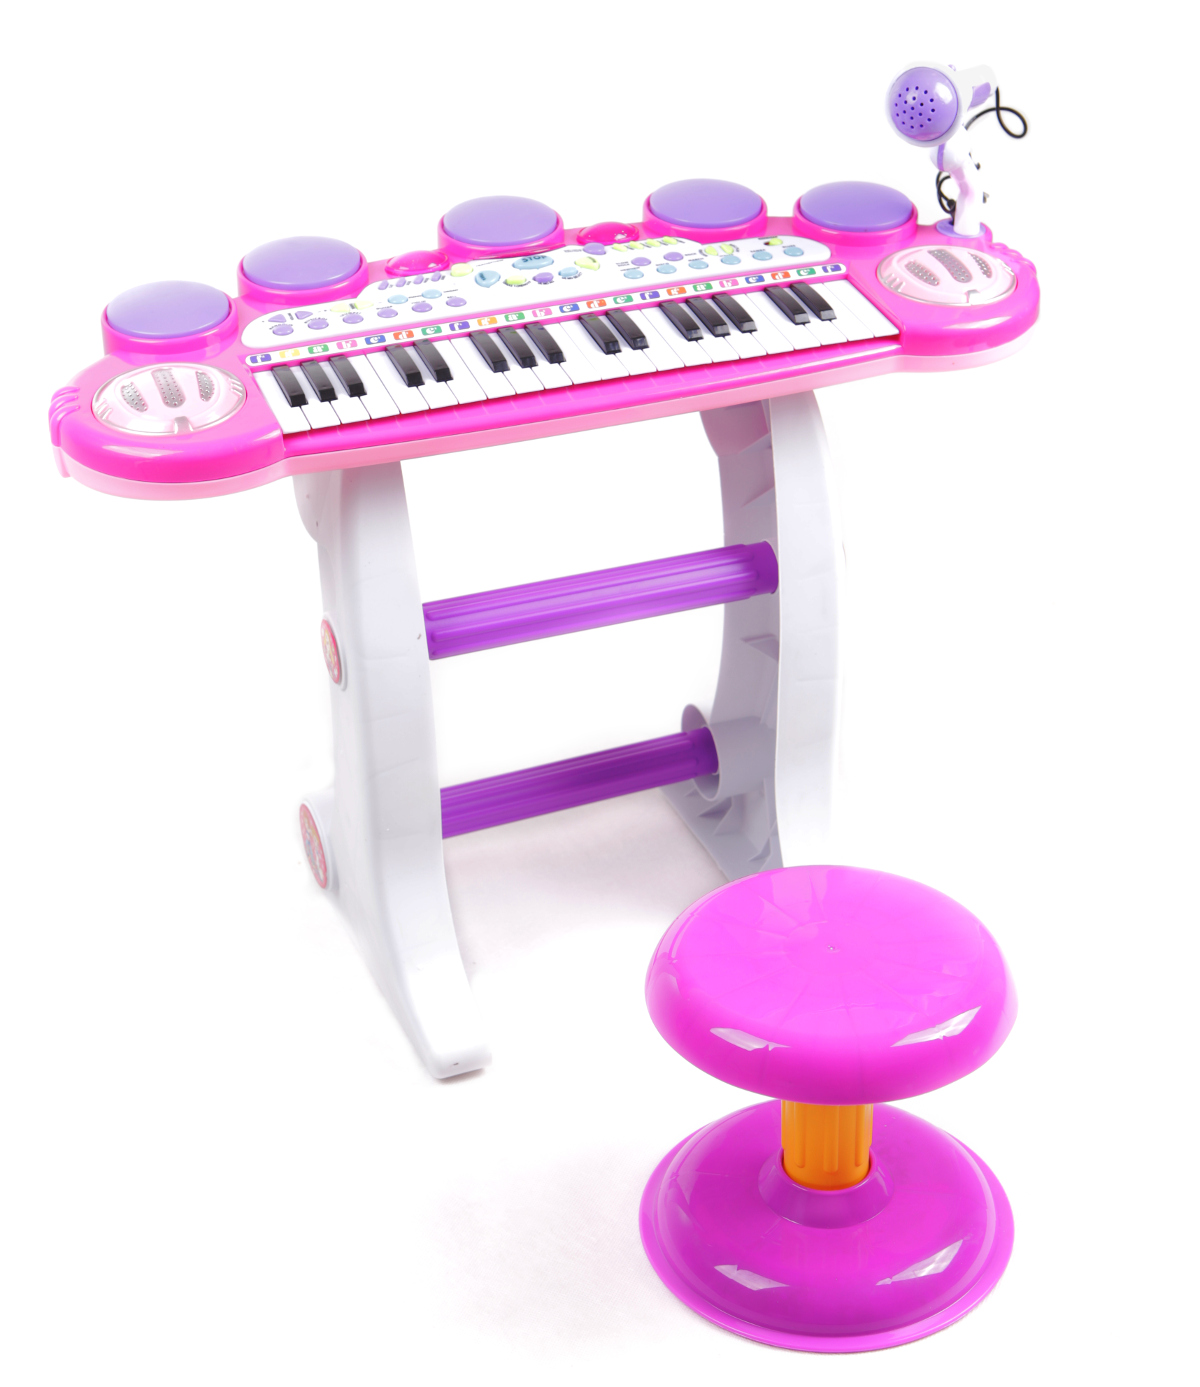 Orga cu Microfon si Scaunel idealSTORE, Glamour Piano, Dimensiuni 45 x 60 x 25 cm, Echipata cu 37 taste functionale, Lumini colorate, Dezvolta dexteritatea manuala Mov-alb